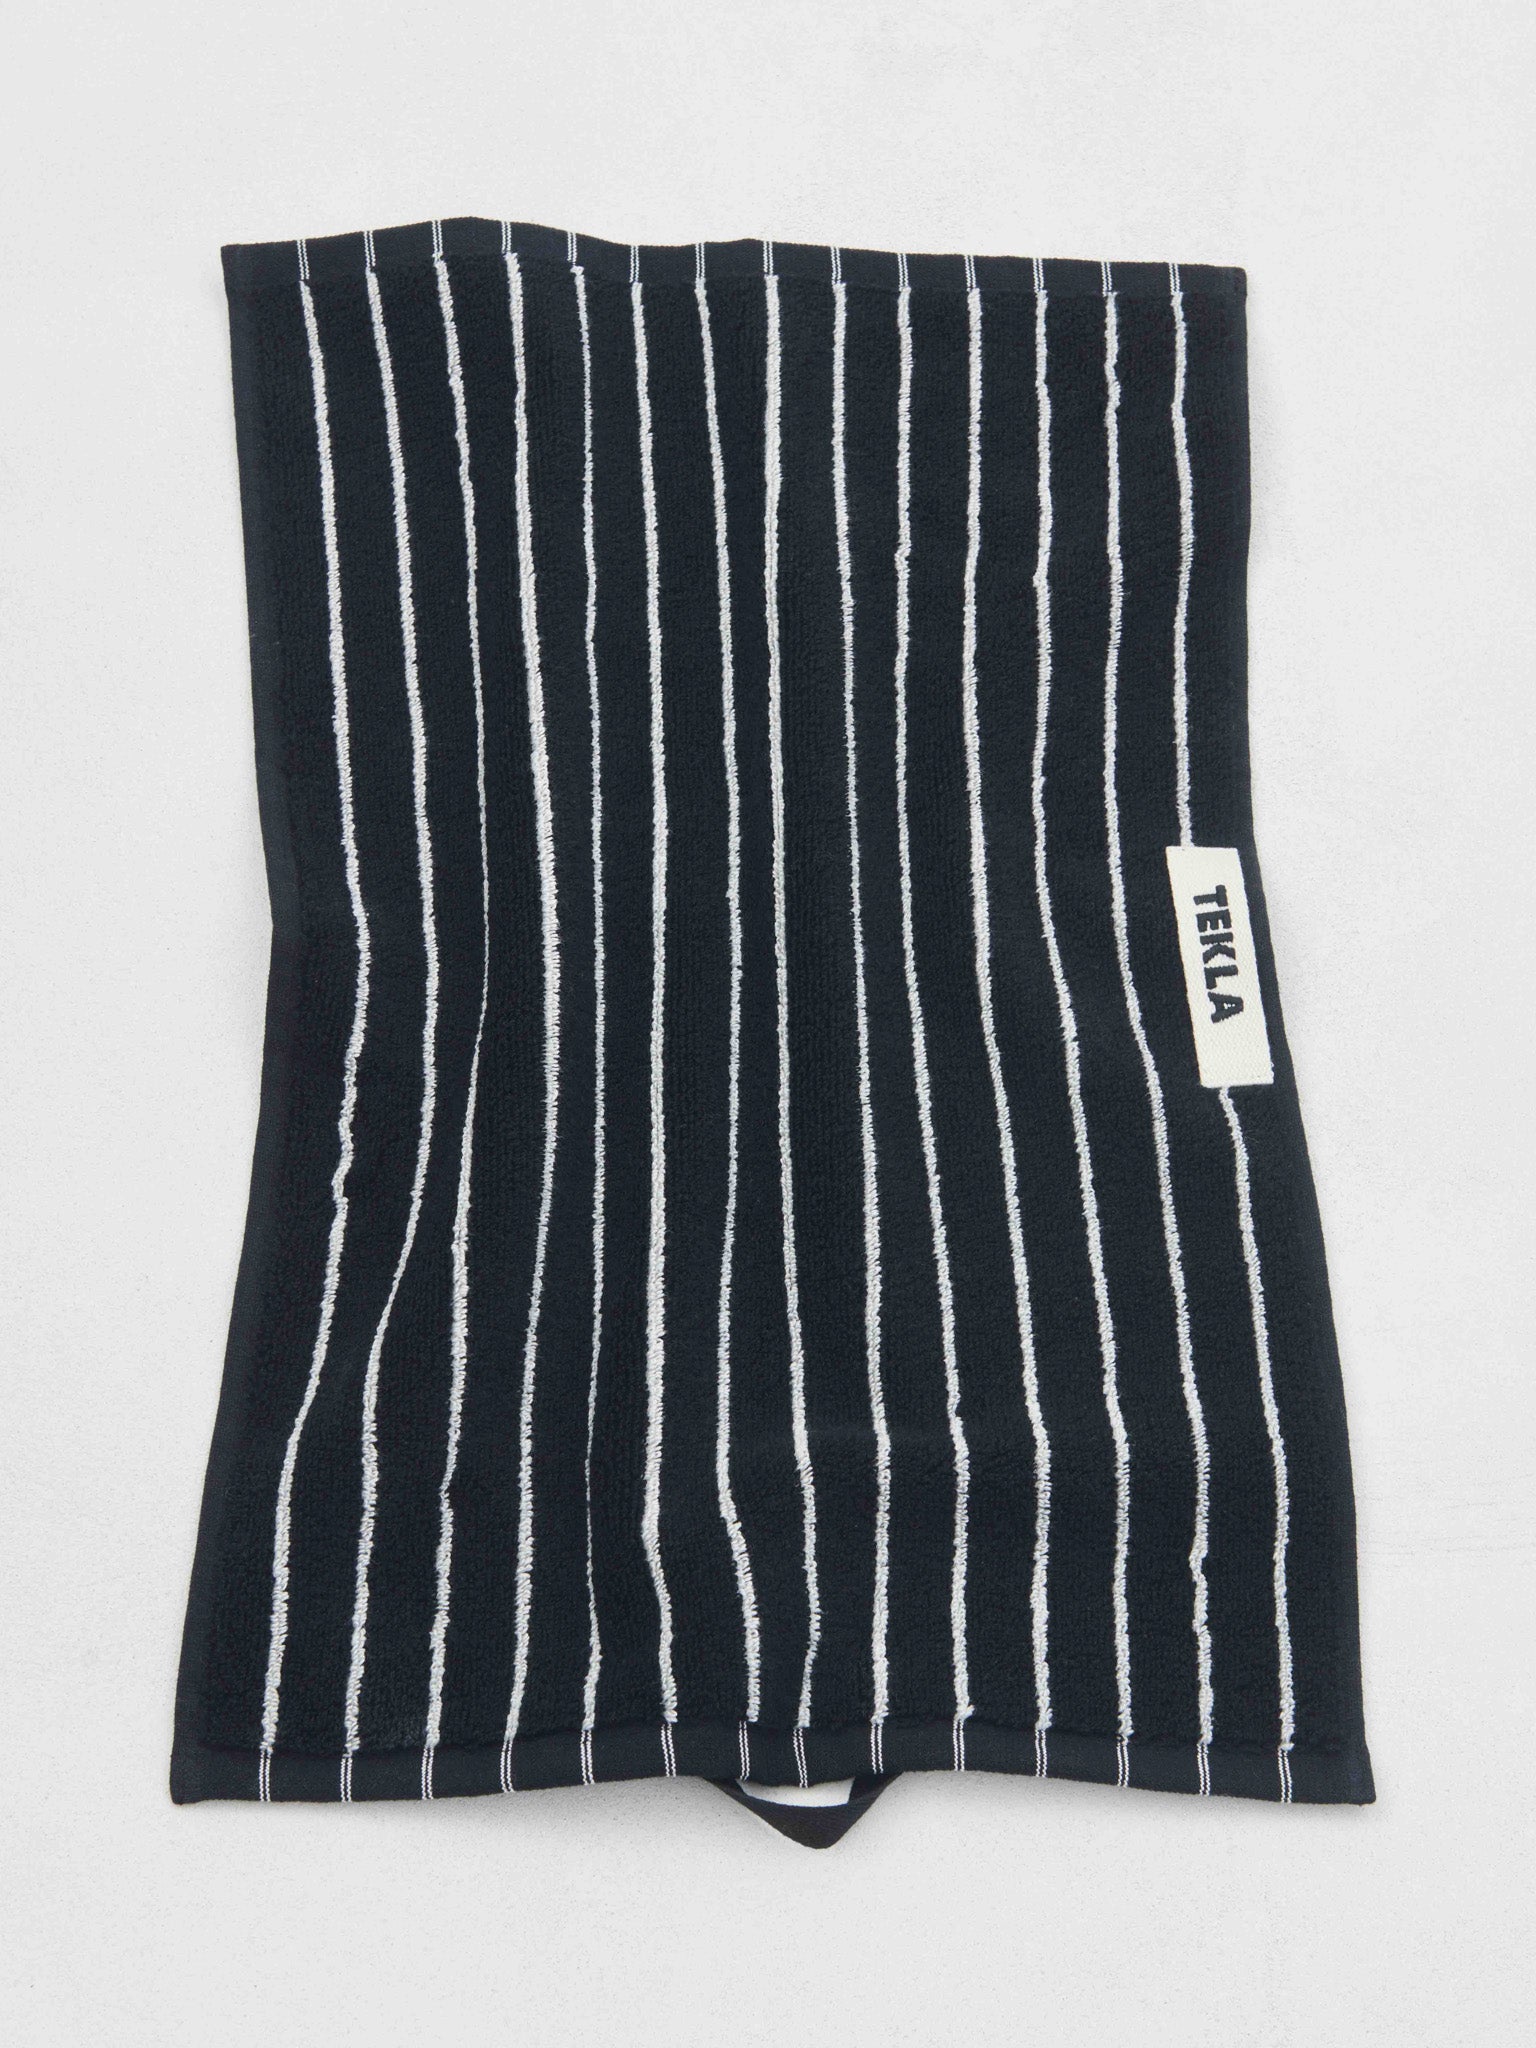 Guest Towel in Black Stripes